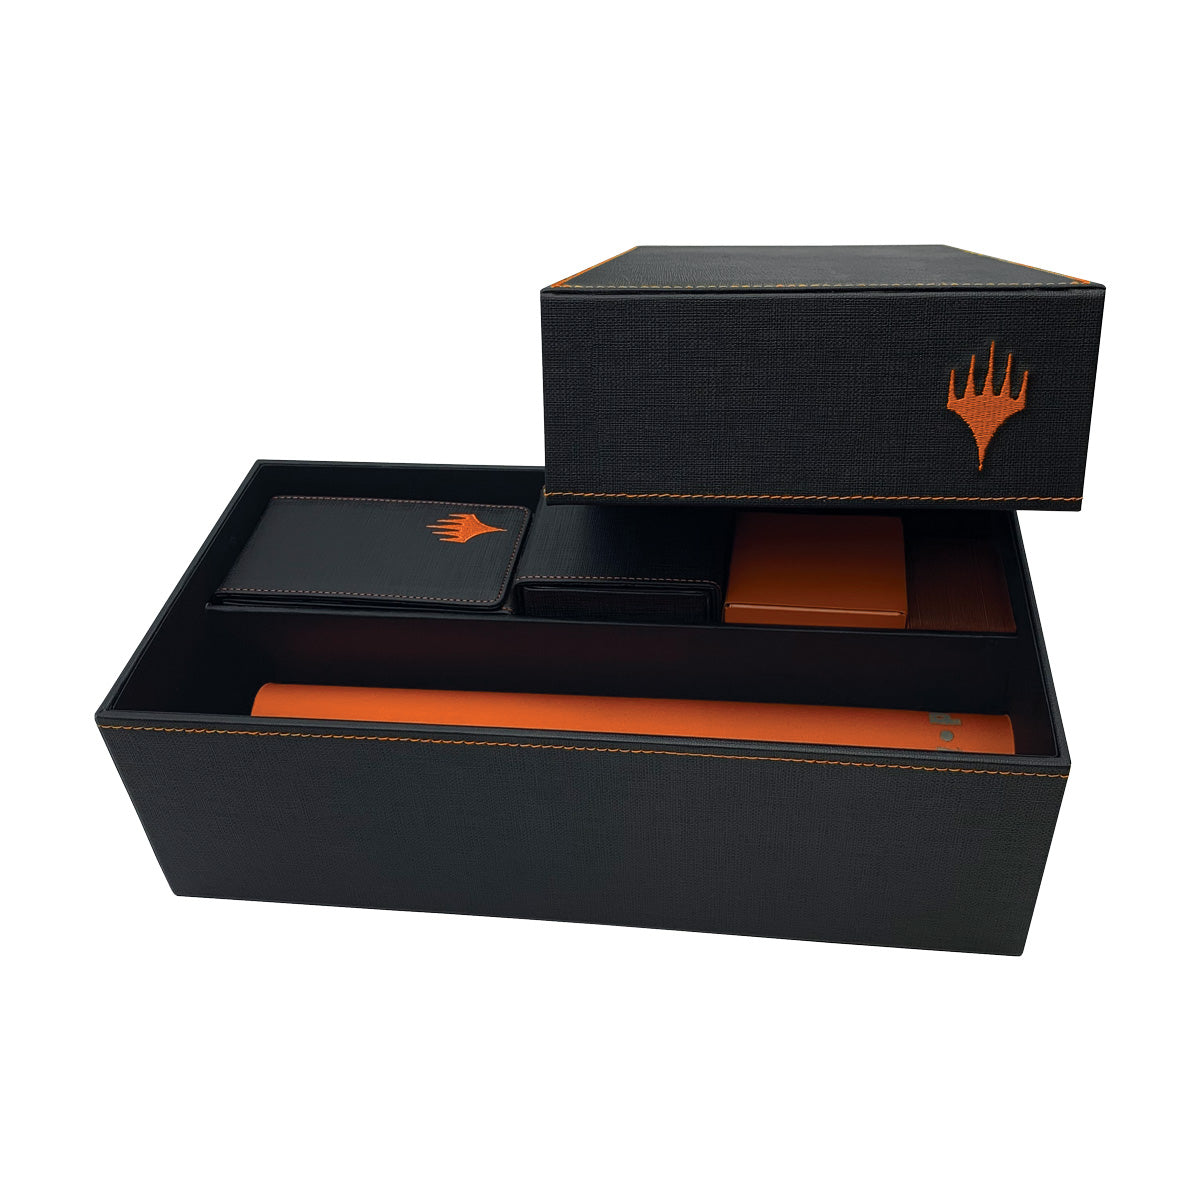 Buy LV, Louis Vuitton Packaging Box, Gift Box, Empty Box - Large